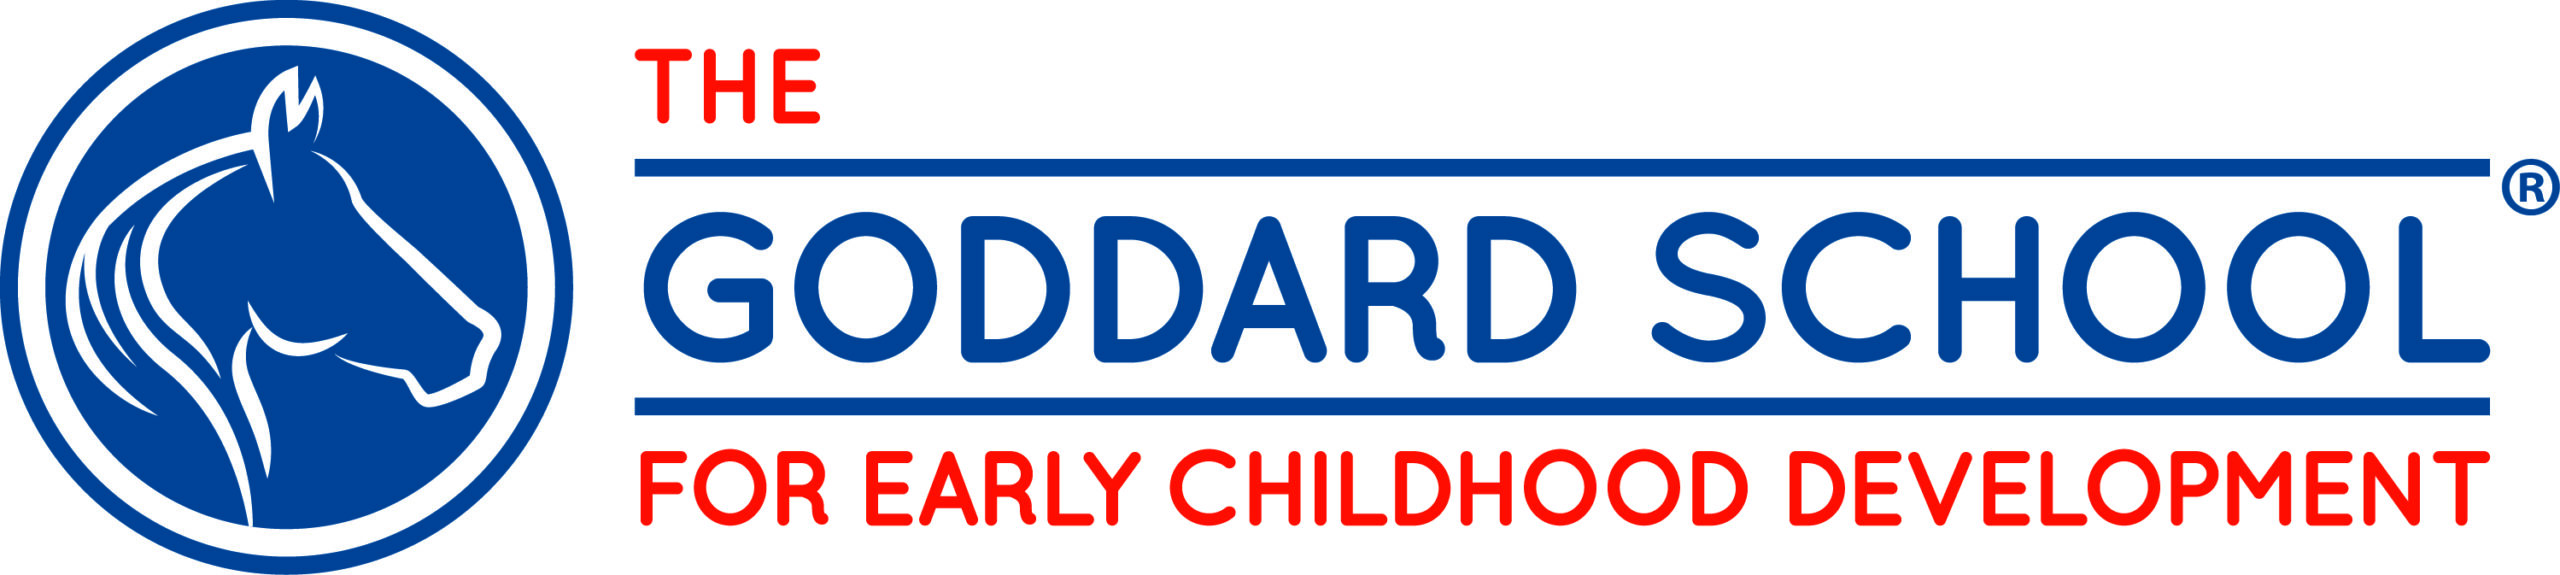 Goddard Logo - Full Color (jpg)